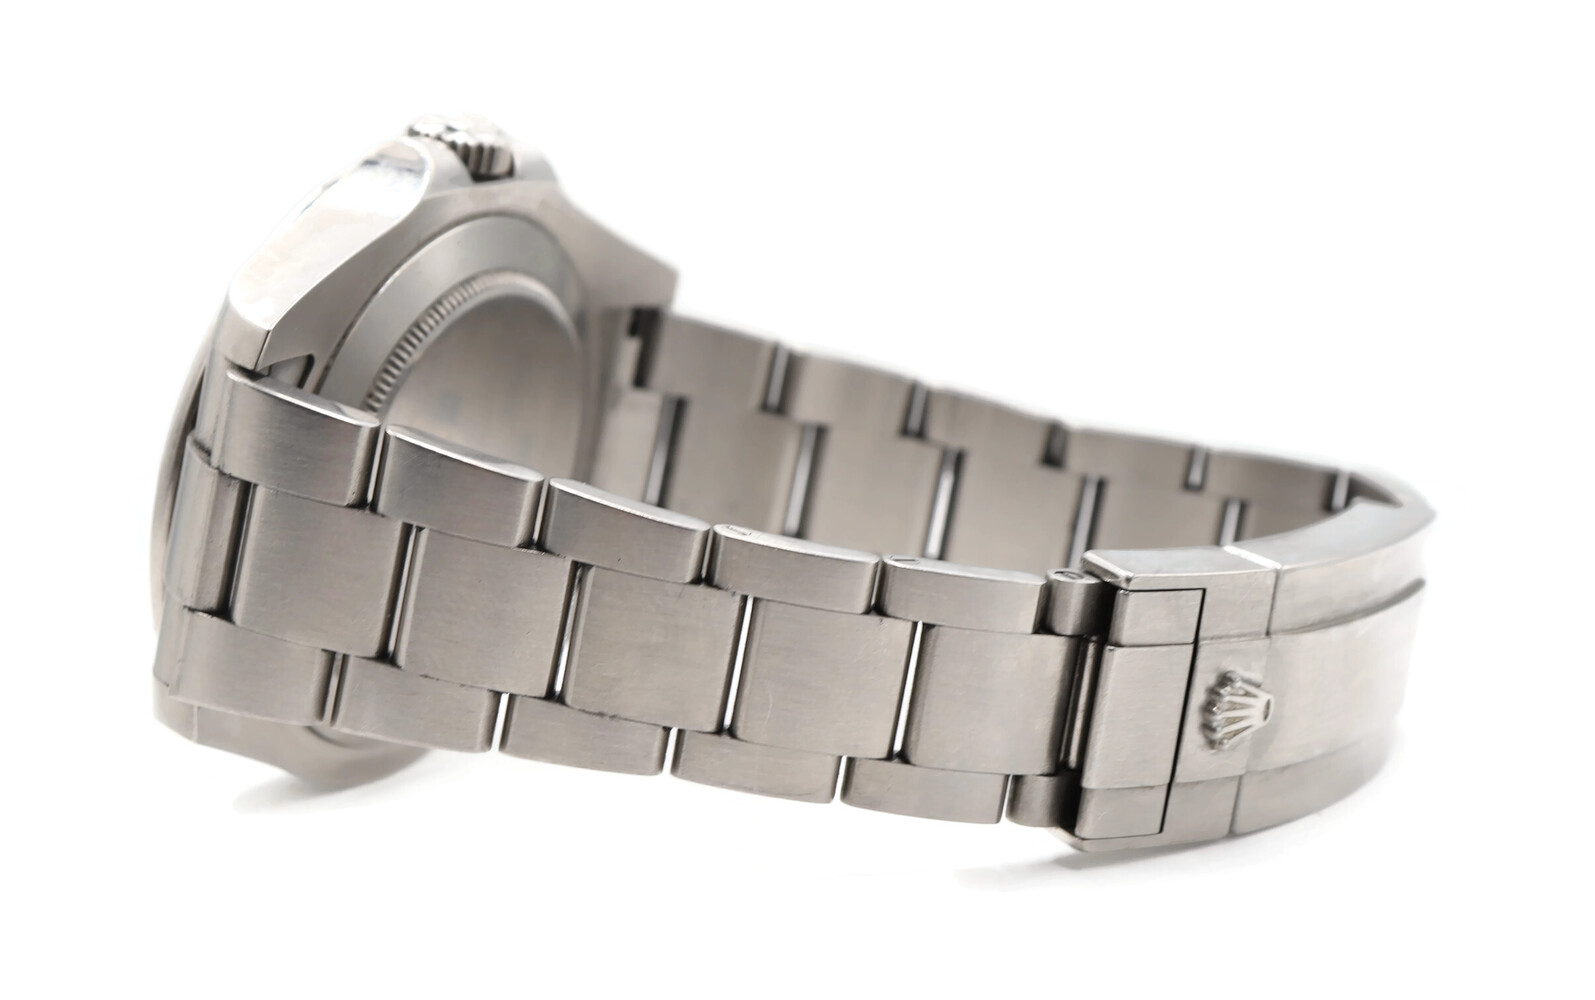 Rolex Explorer II 216570 Superlative Chronometer Men's Wrist Watch 